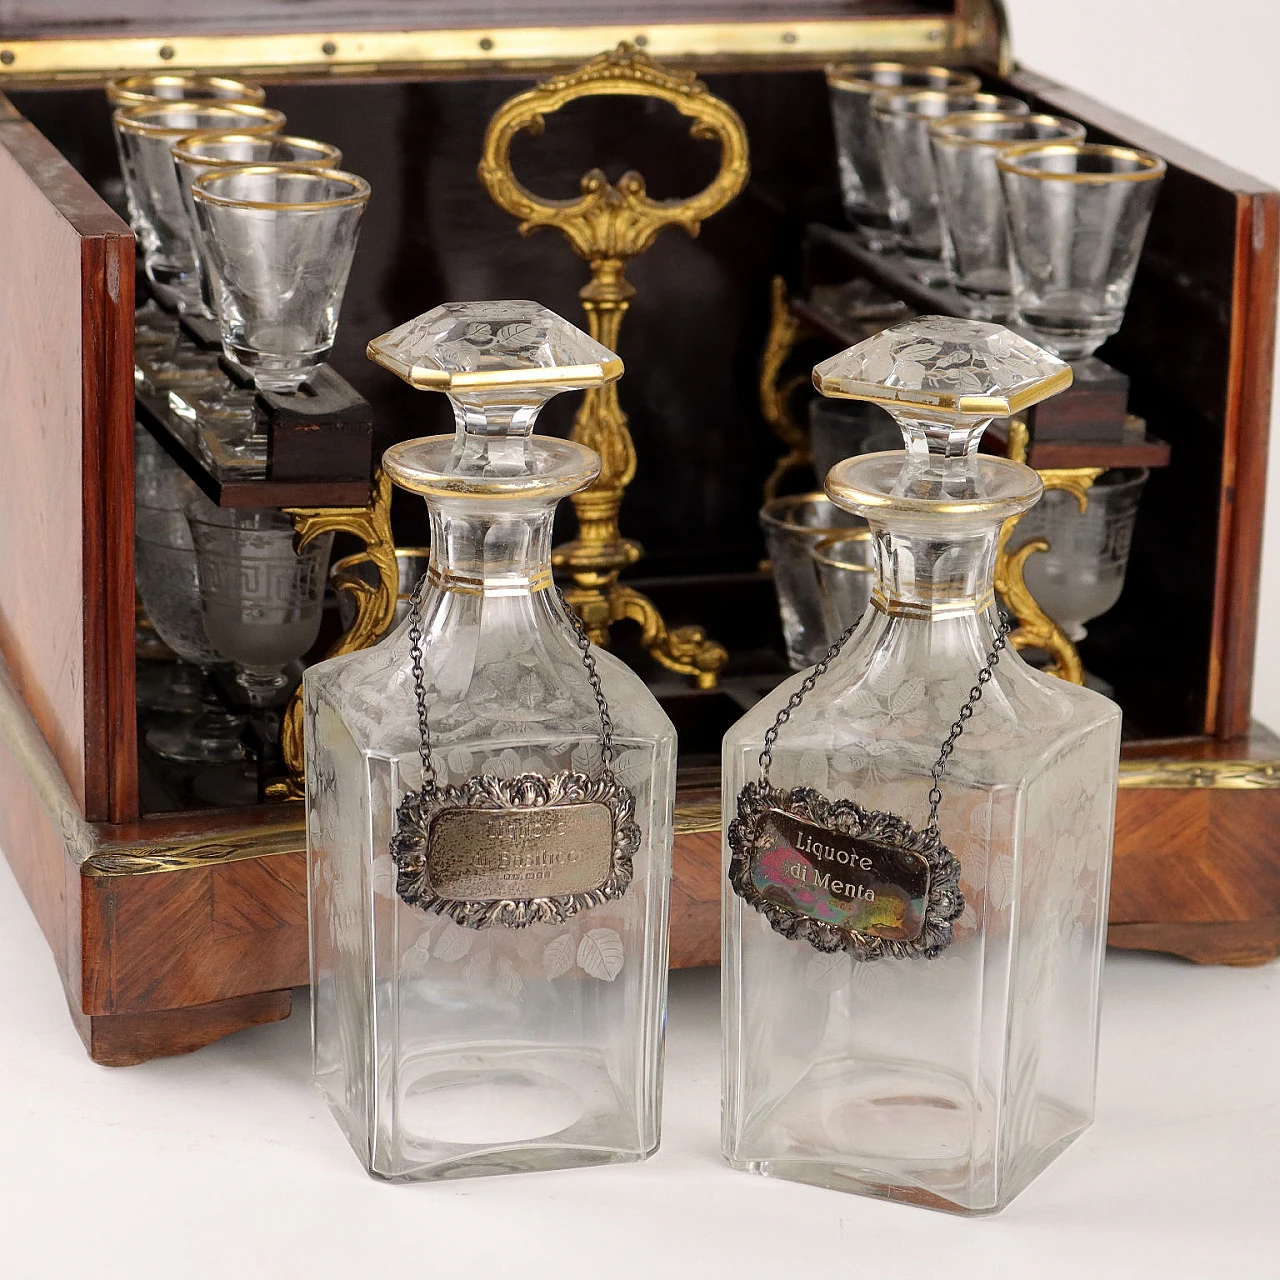 Bois de rose wooden liquor box with glasses & bottles, 19th century 5